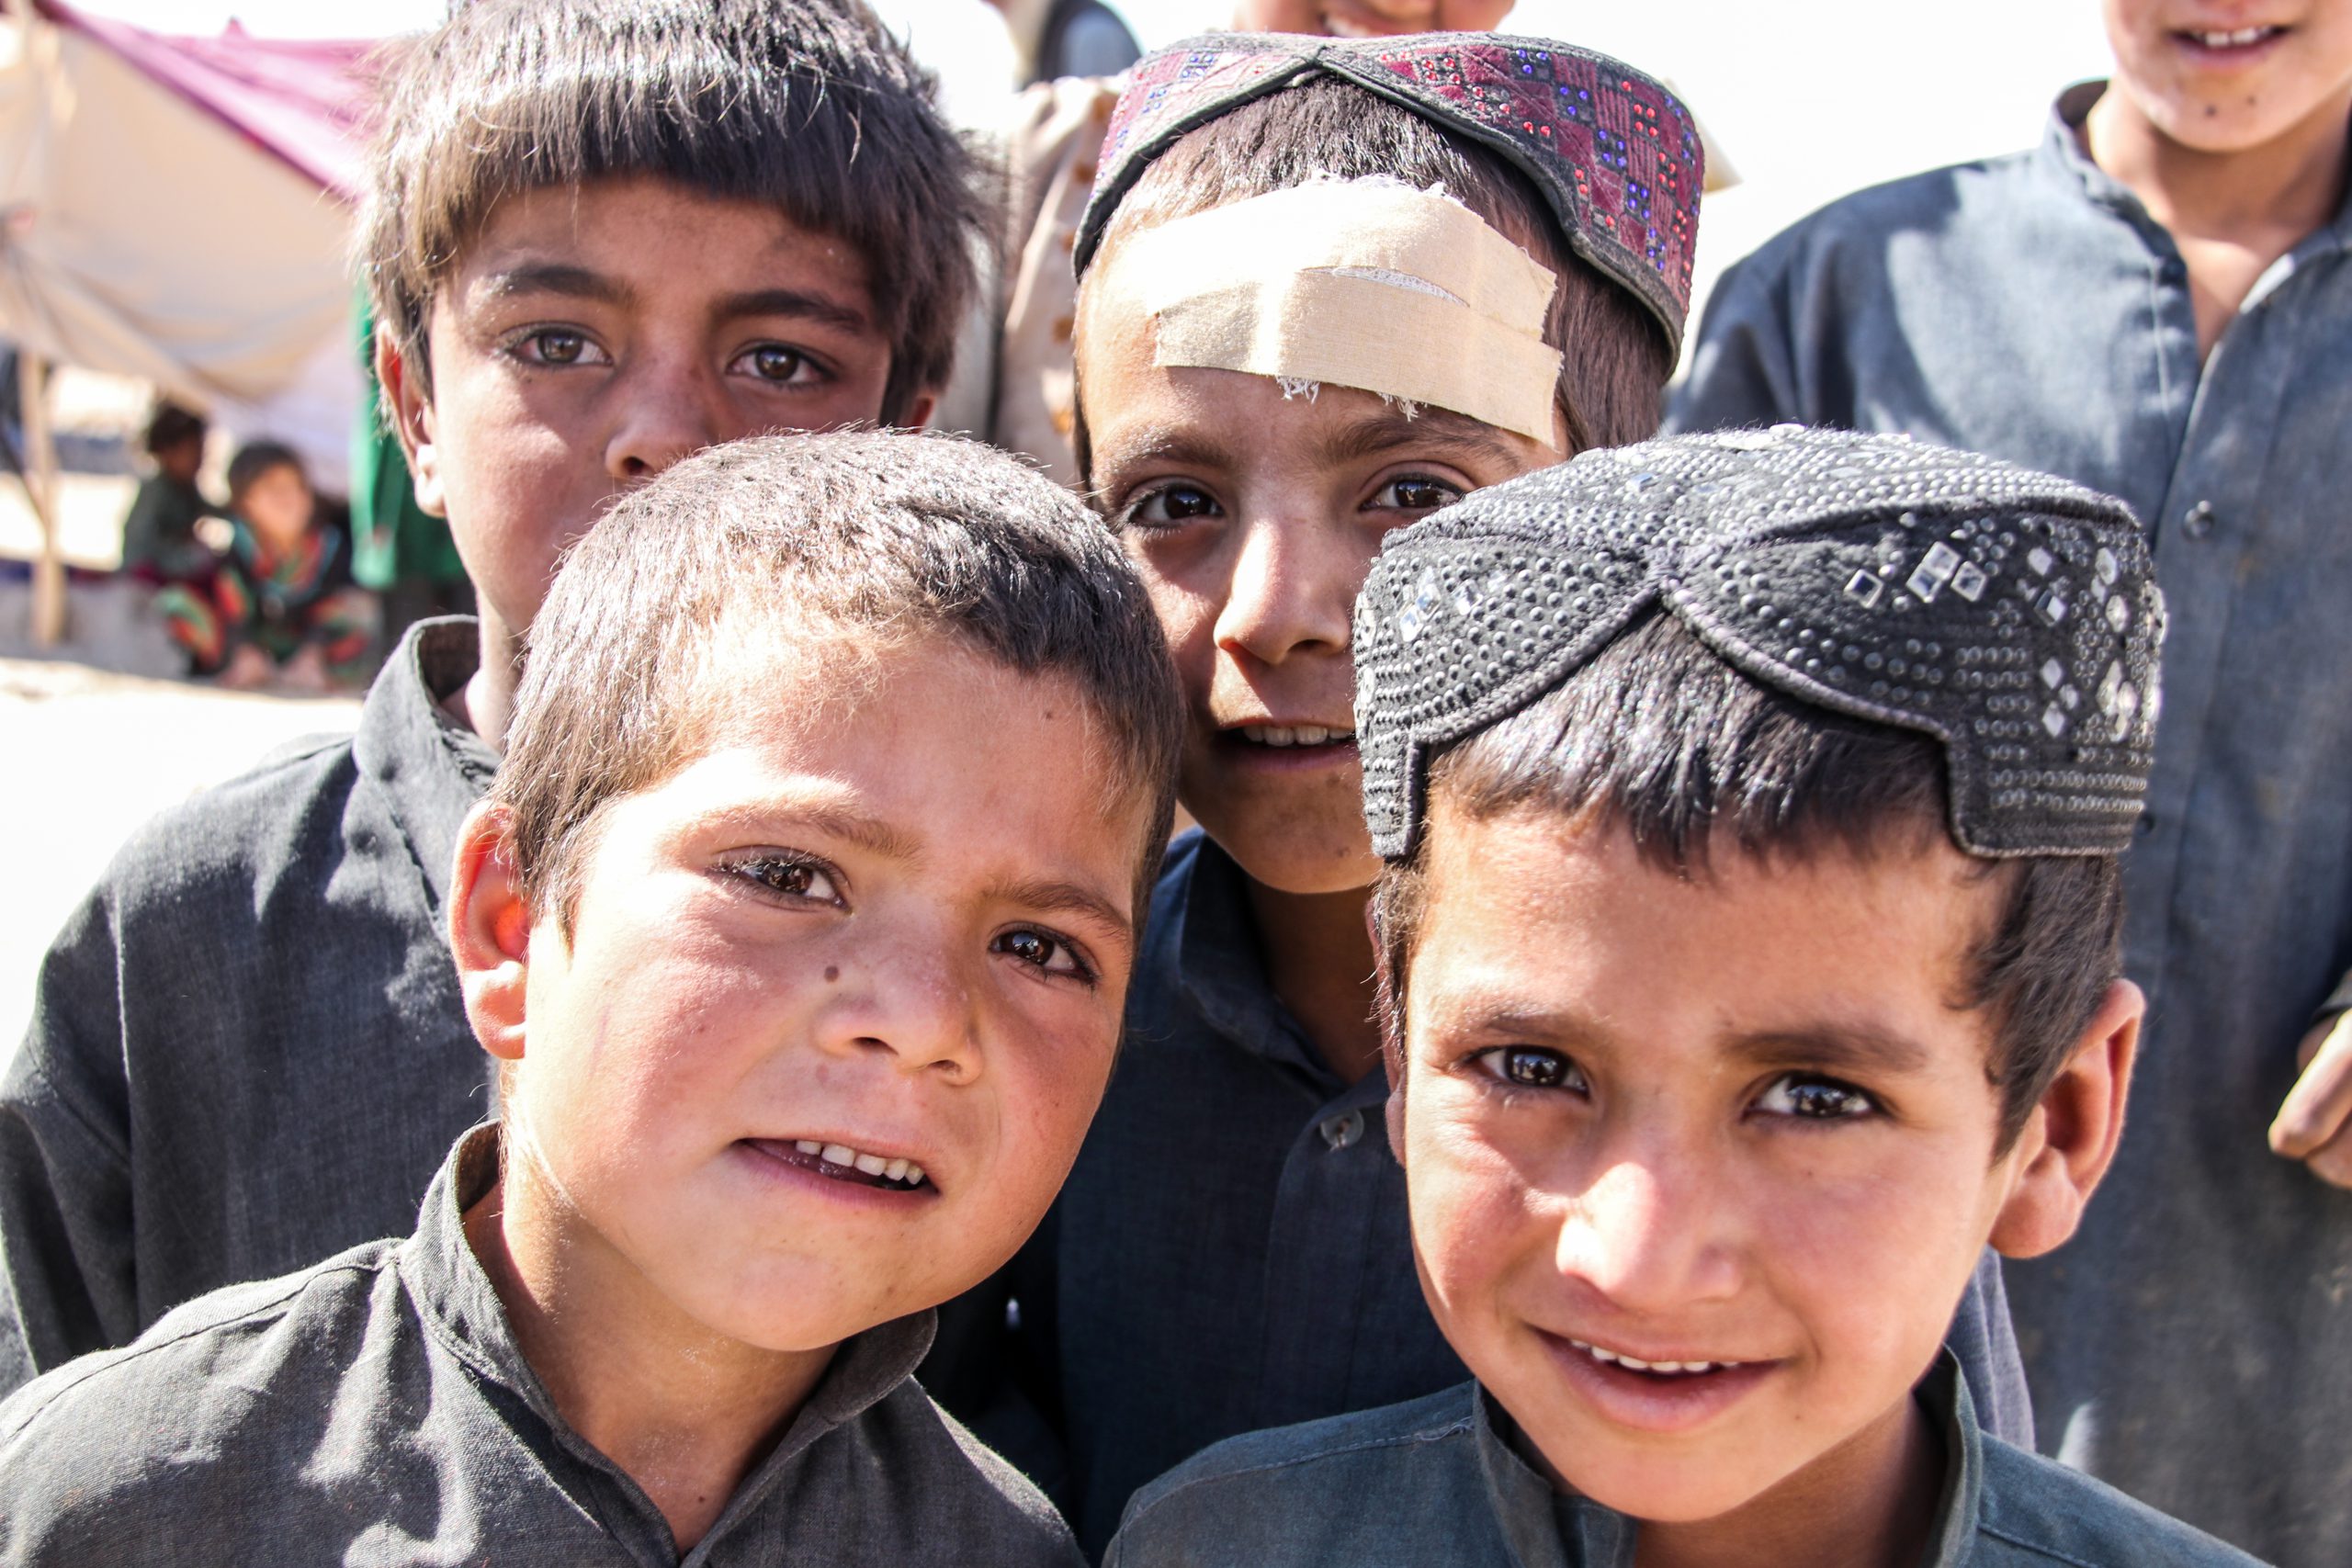 Bacha Bazi - severe child abuse disguised as an Afghani custom pic